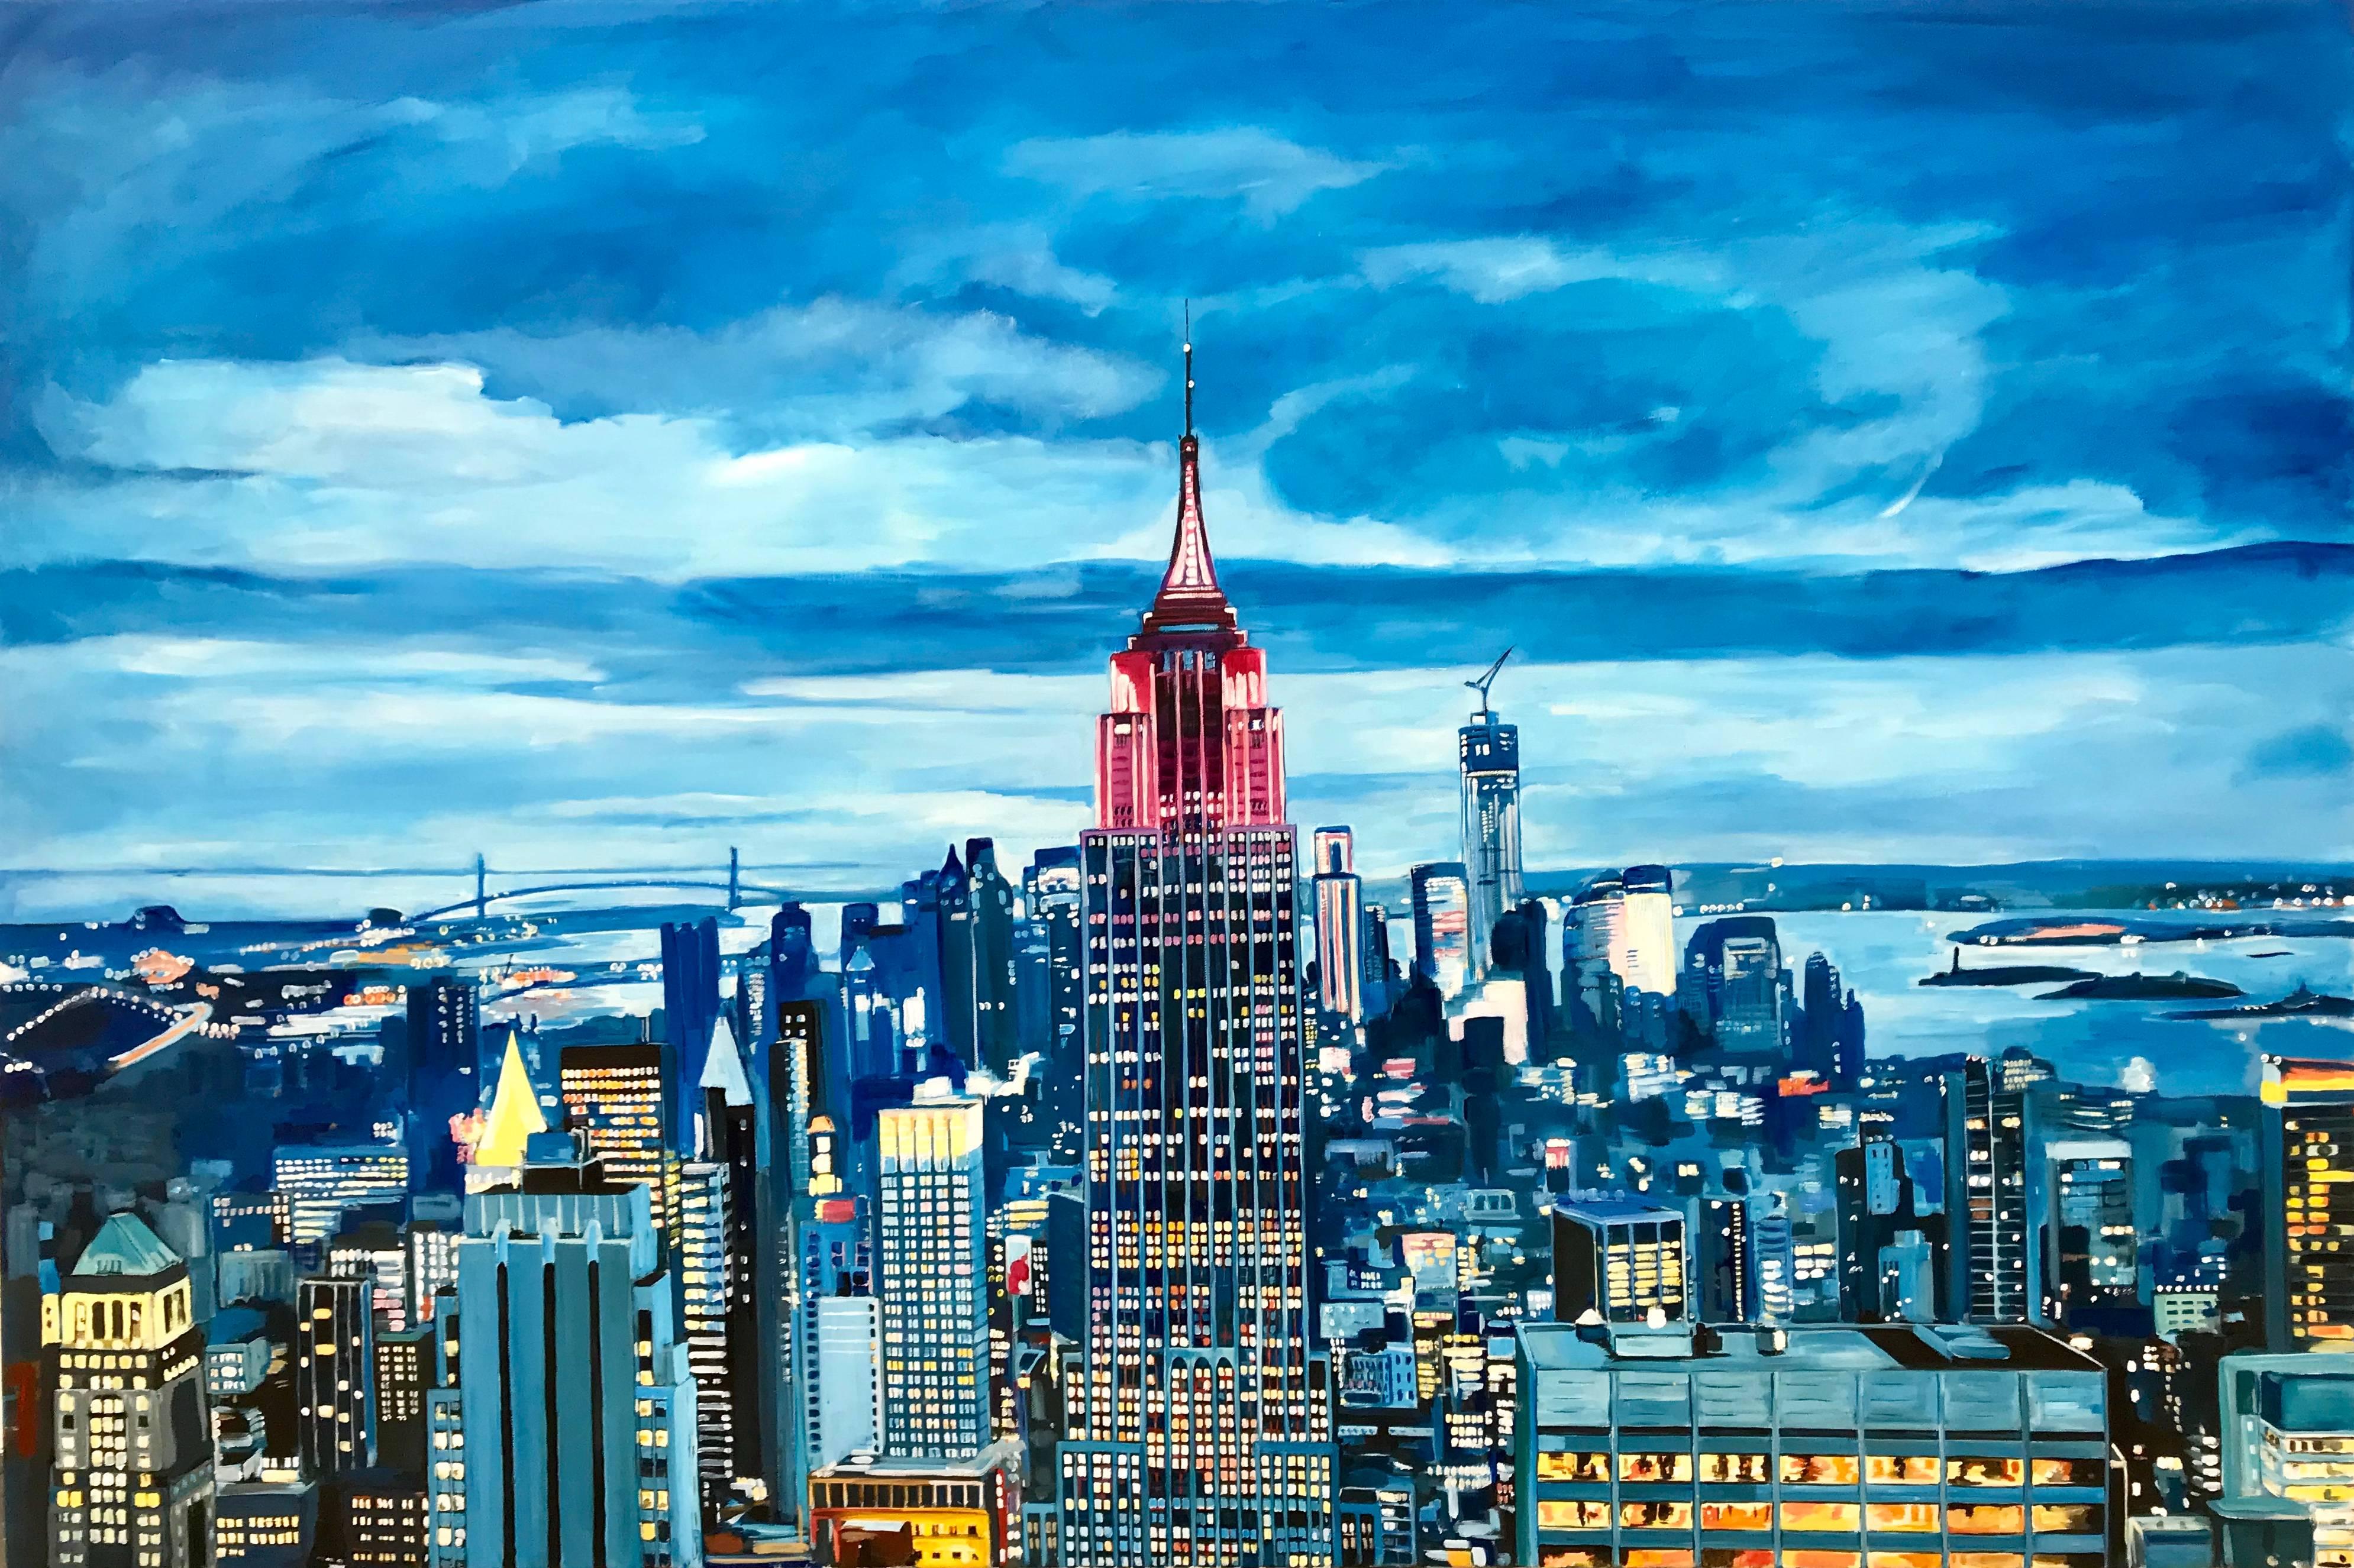 Empire State Manhattan Cityscape Painting New York by British Landscape Artist